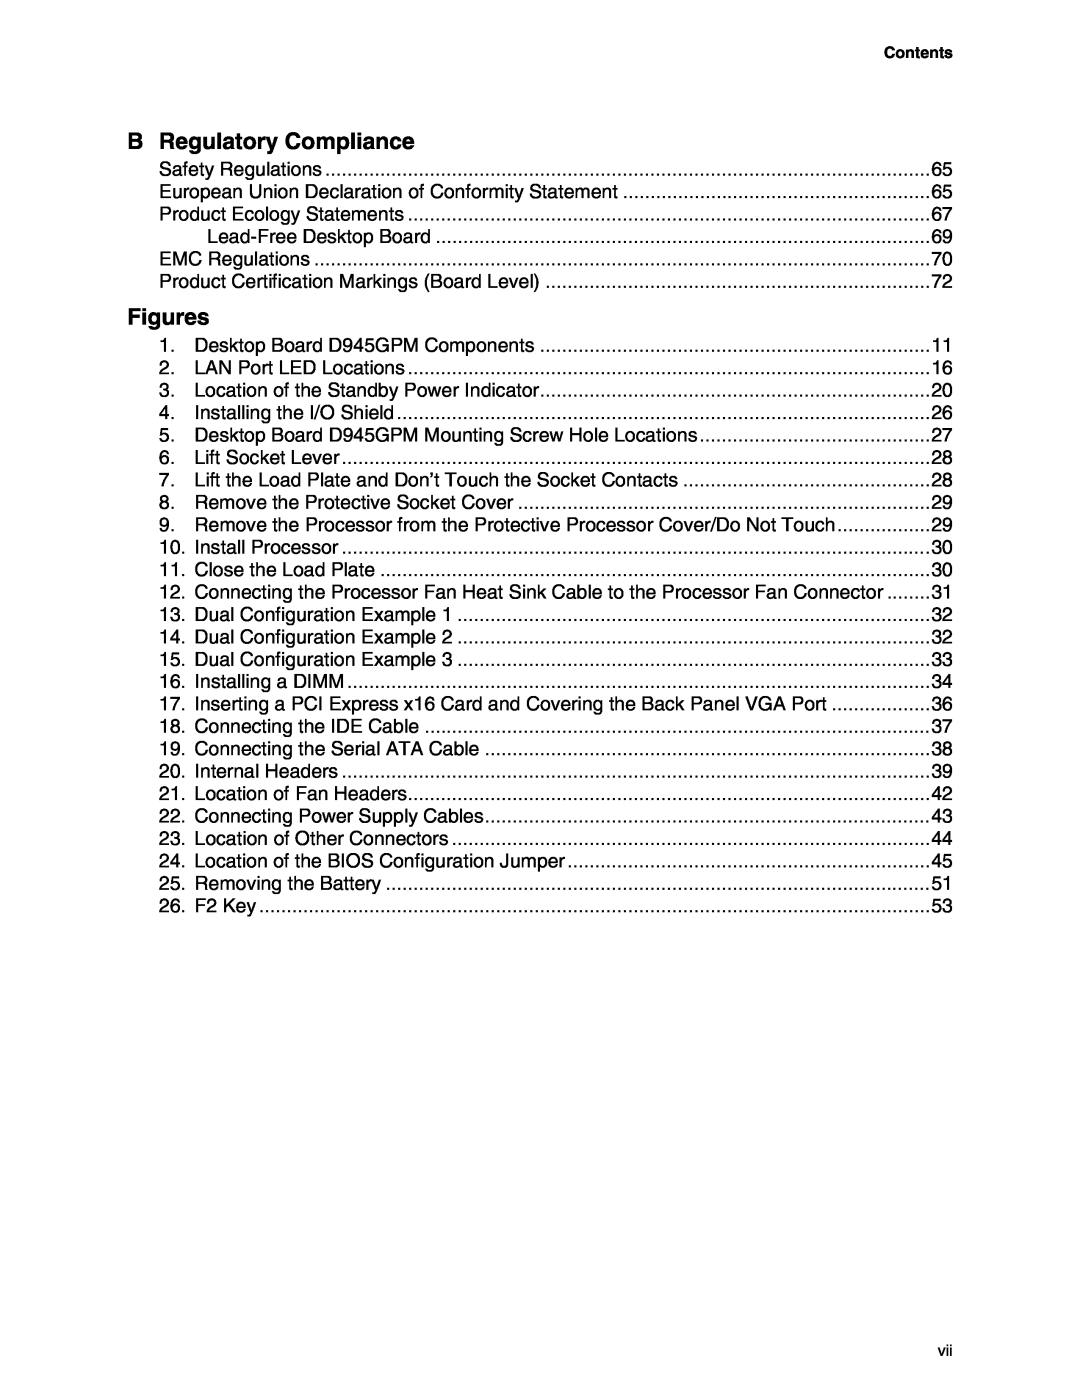 Intel D945GPM manual B Regulatory Compliance, Figures, Contents 